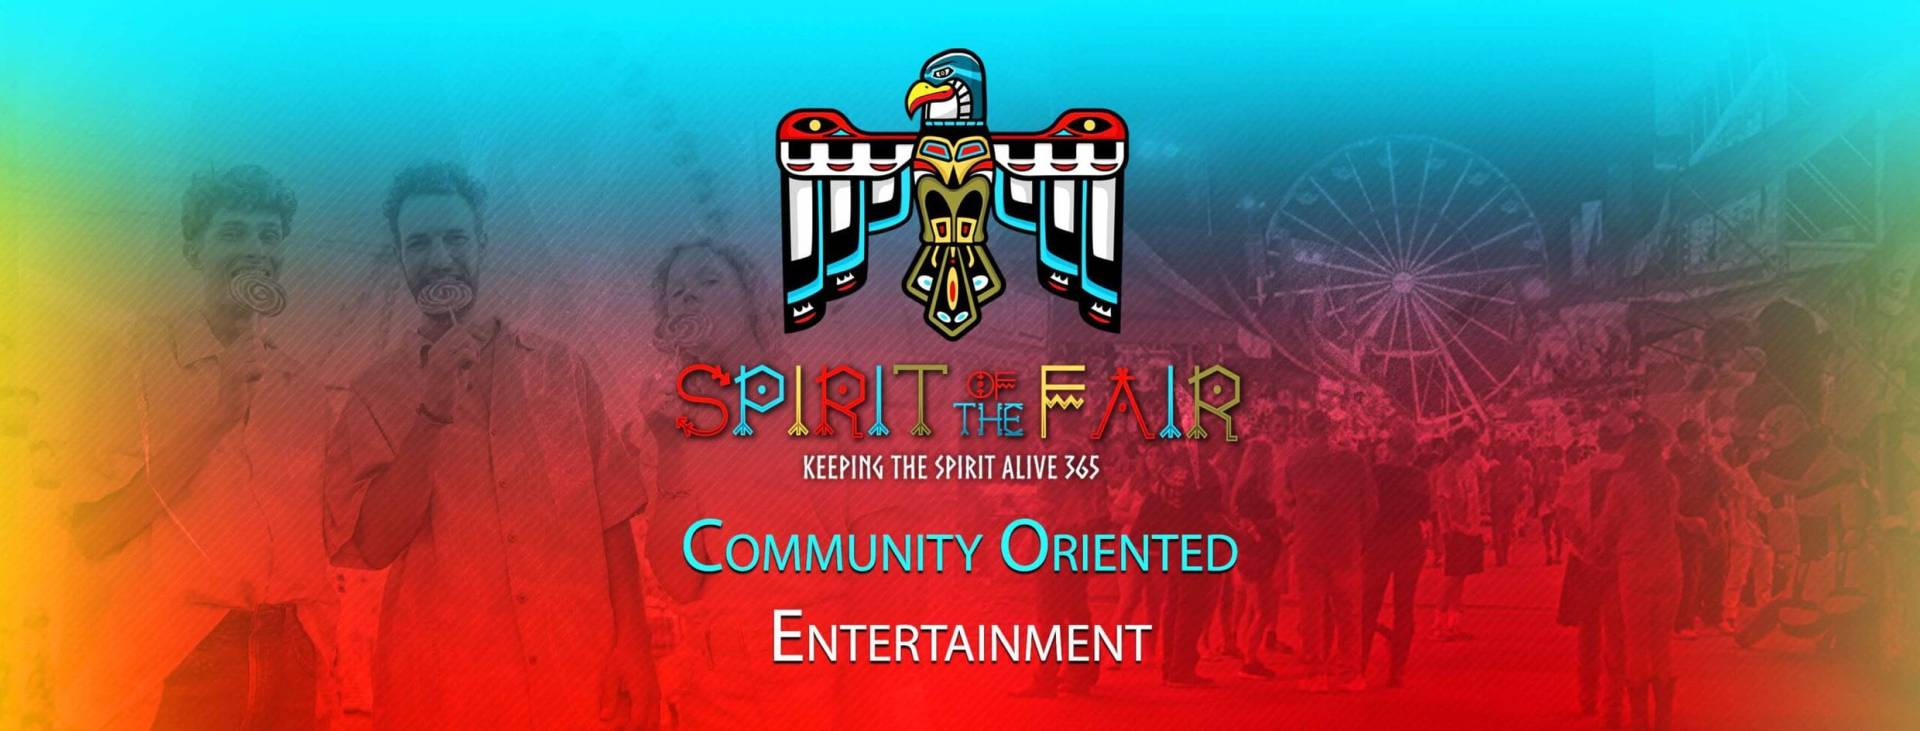 Community Oriented Entertainment Spirit of the Fair